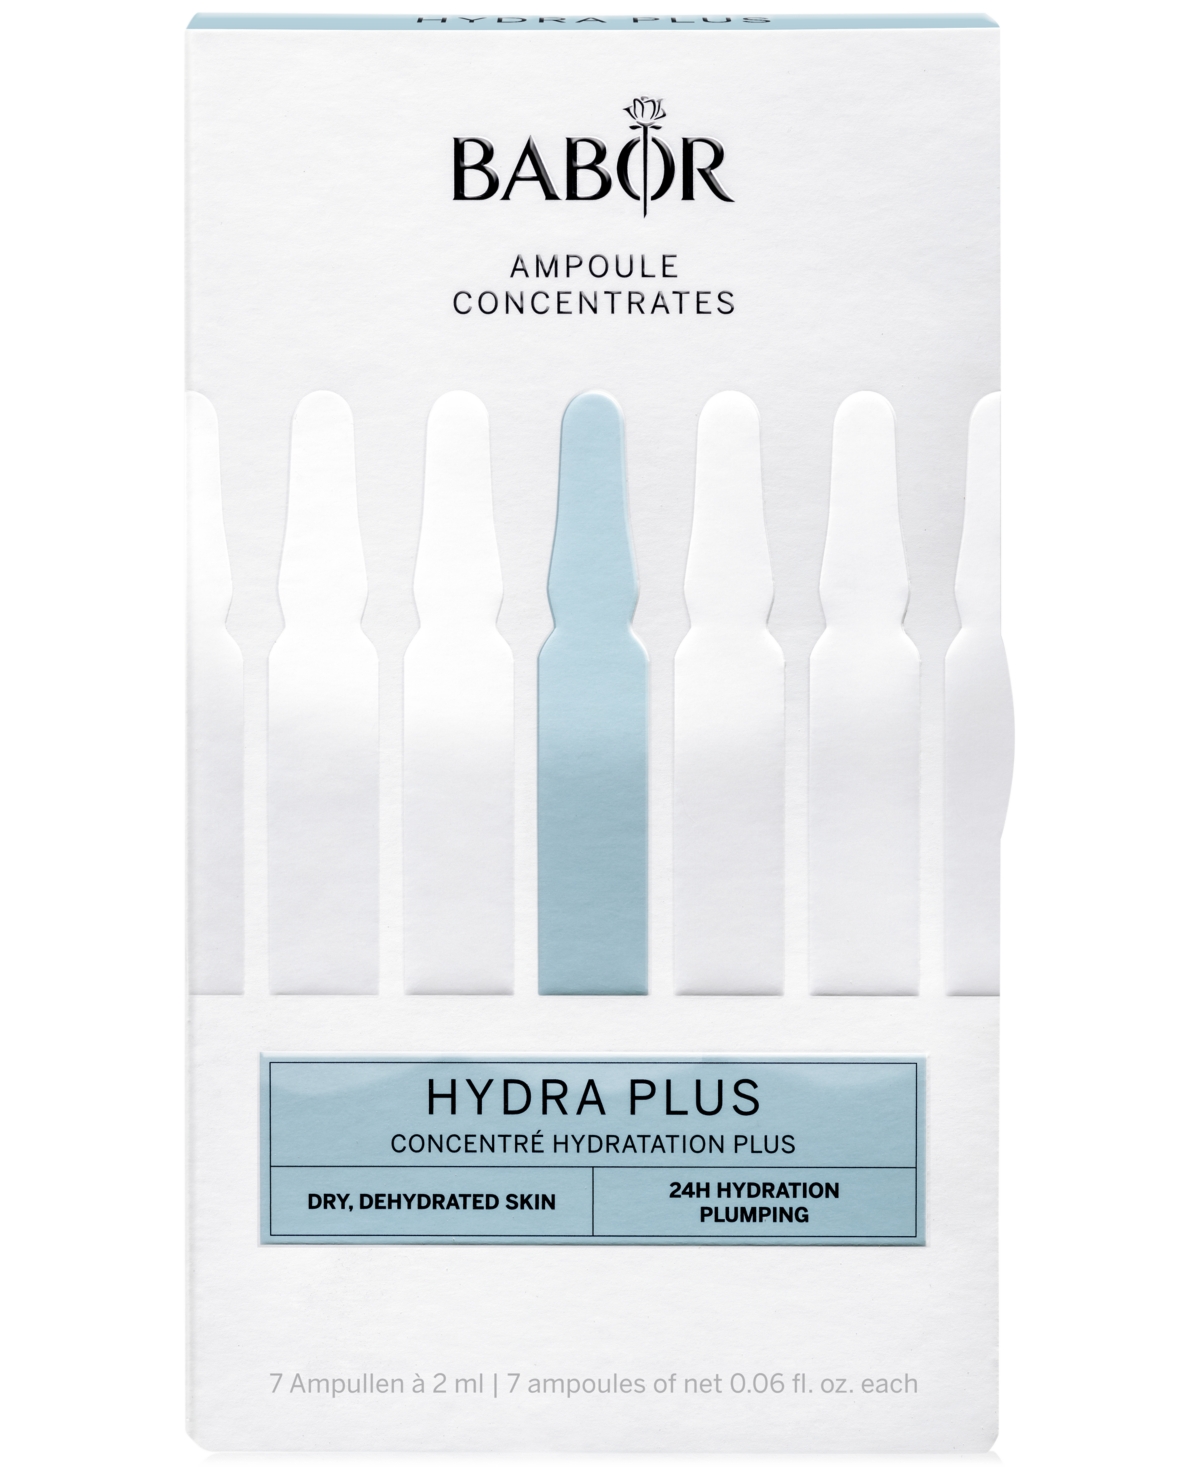 Babor Hydra Plus Ampoule Concentrates